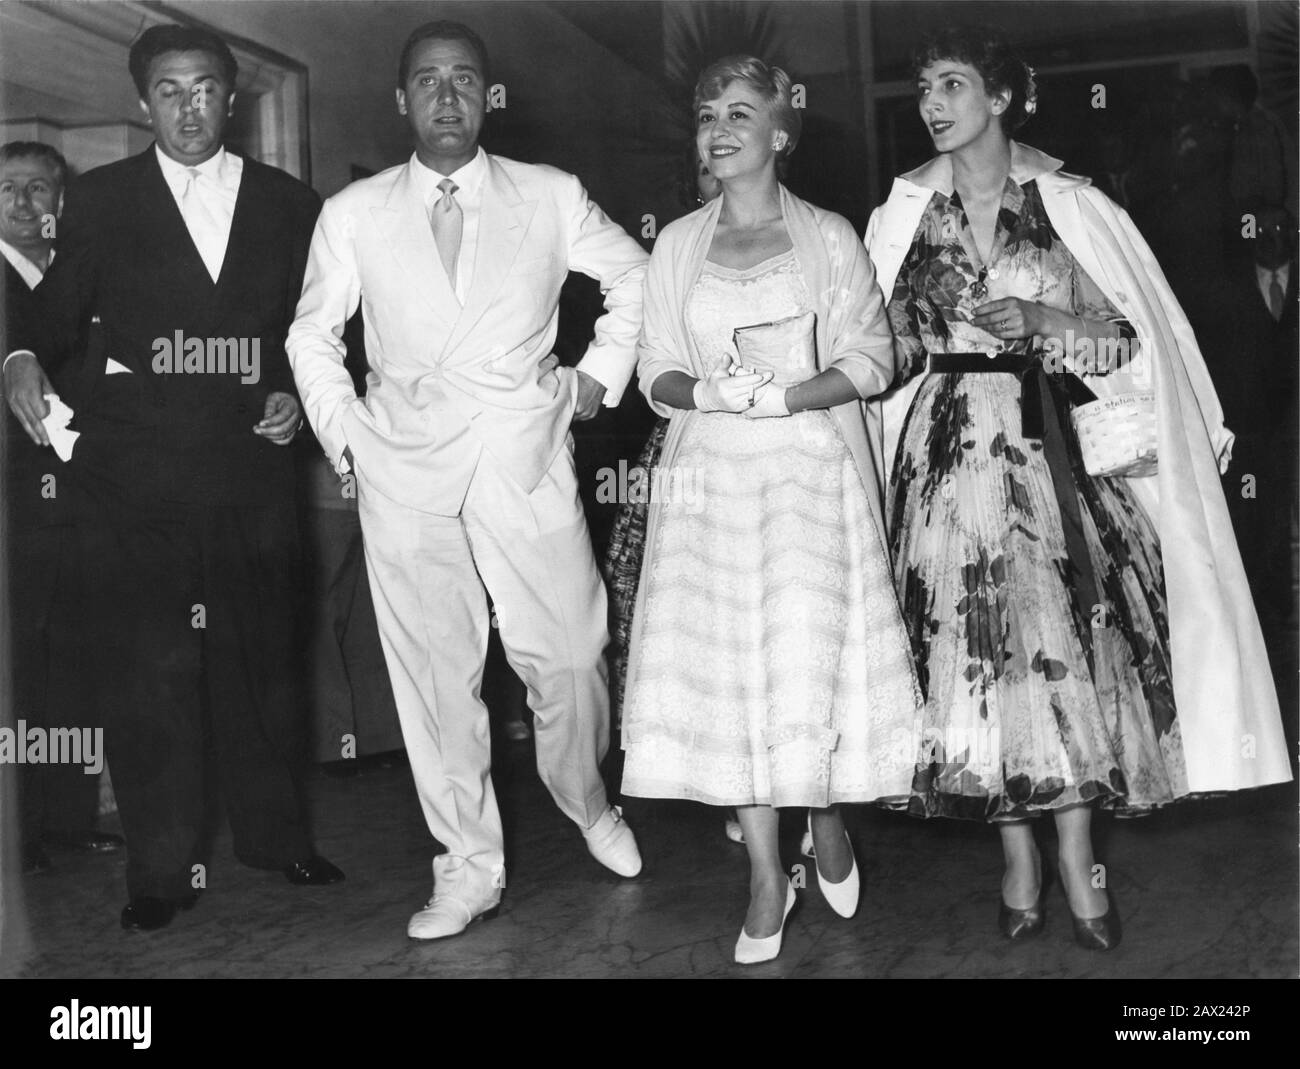 1955 , 4 juillet , ROMA , ITALIE : L'actrice italienne DE cinéma VALENTINA CORTESE ( née à Milano , 1923 ) avec des amis GIULIETTA MASINA , Alberto SORDI et le réalisateur FEDERICO FELLINI lors d'un gala au théâtre performance pour avantage PRO-MUTILATI DI GUERRA di Don Gnocchi - CINÉMA - DIVA - DIVINA - chignon - bionda - blonde - capelli biondi - amici - ami - robe blanche - abito vestito bianco - dentelle - pizzo - chiffon - borsetta - sac - chaussures - scarpe - cravatta - tie - regista cinématographiques ---sourire - sorriso - MODE - MODA - ANNI CINQUANTA - '50 - 50's - serata per benegicenza ----PAS POUR PUBBLI Banque D'Images